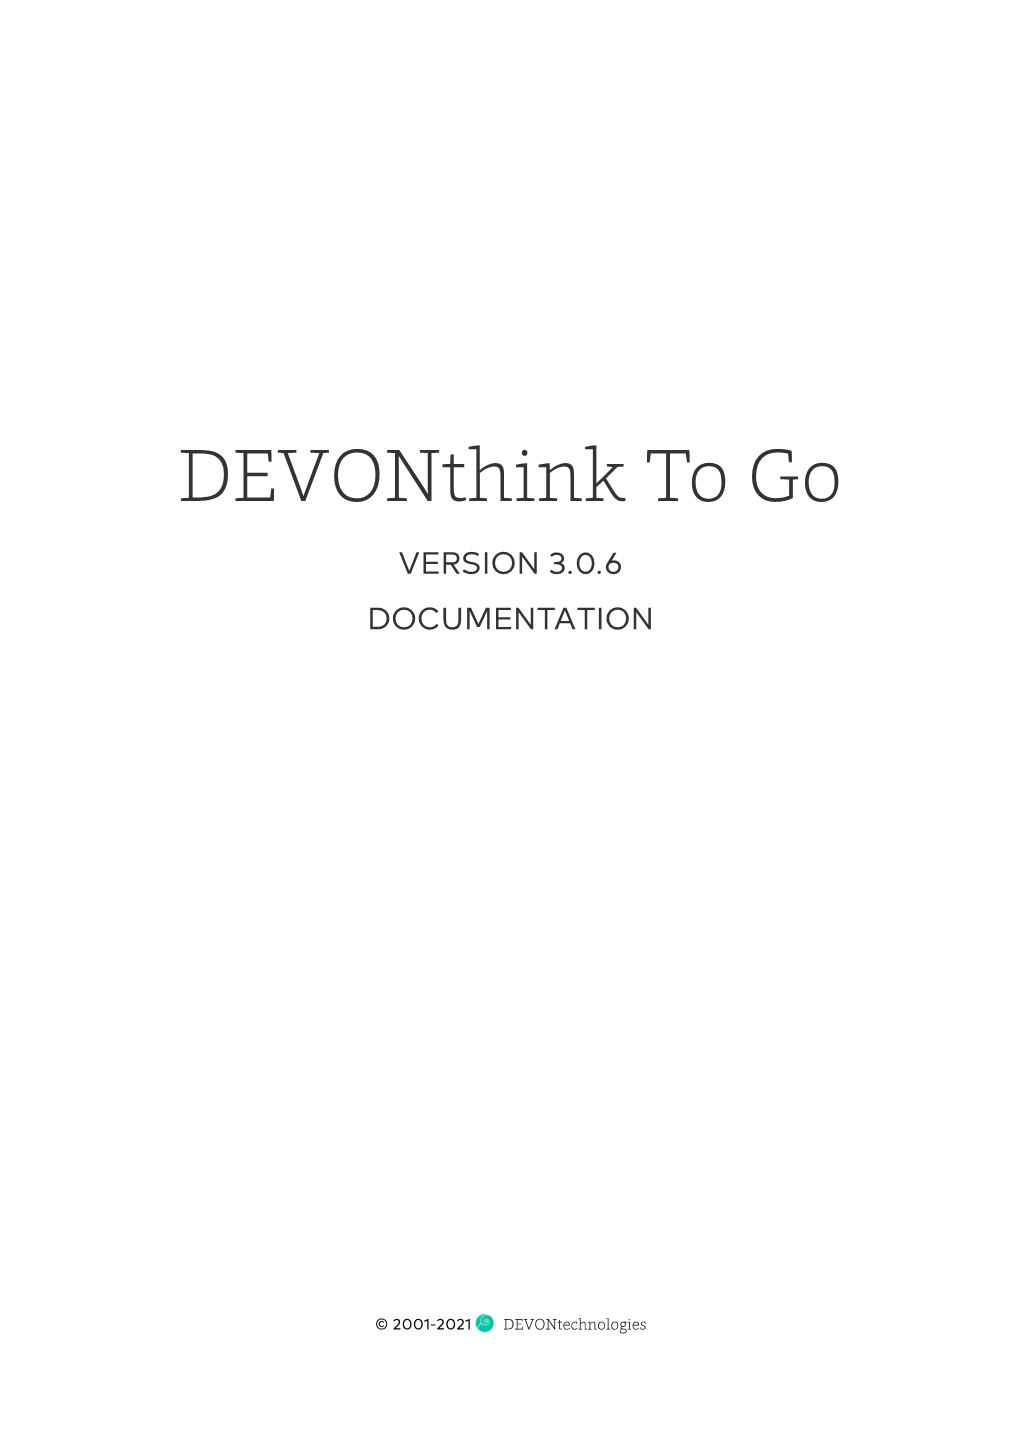 Devonthink to Go VERSION 3.0.6 DOCUMENTATION